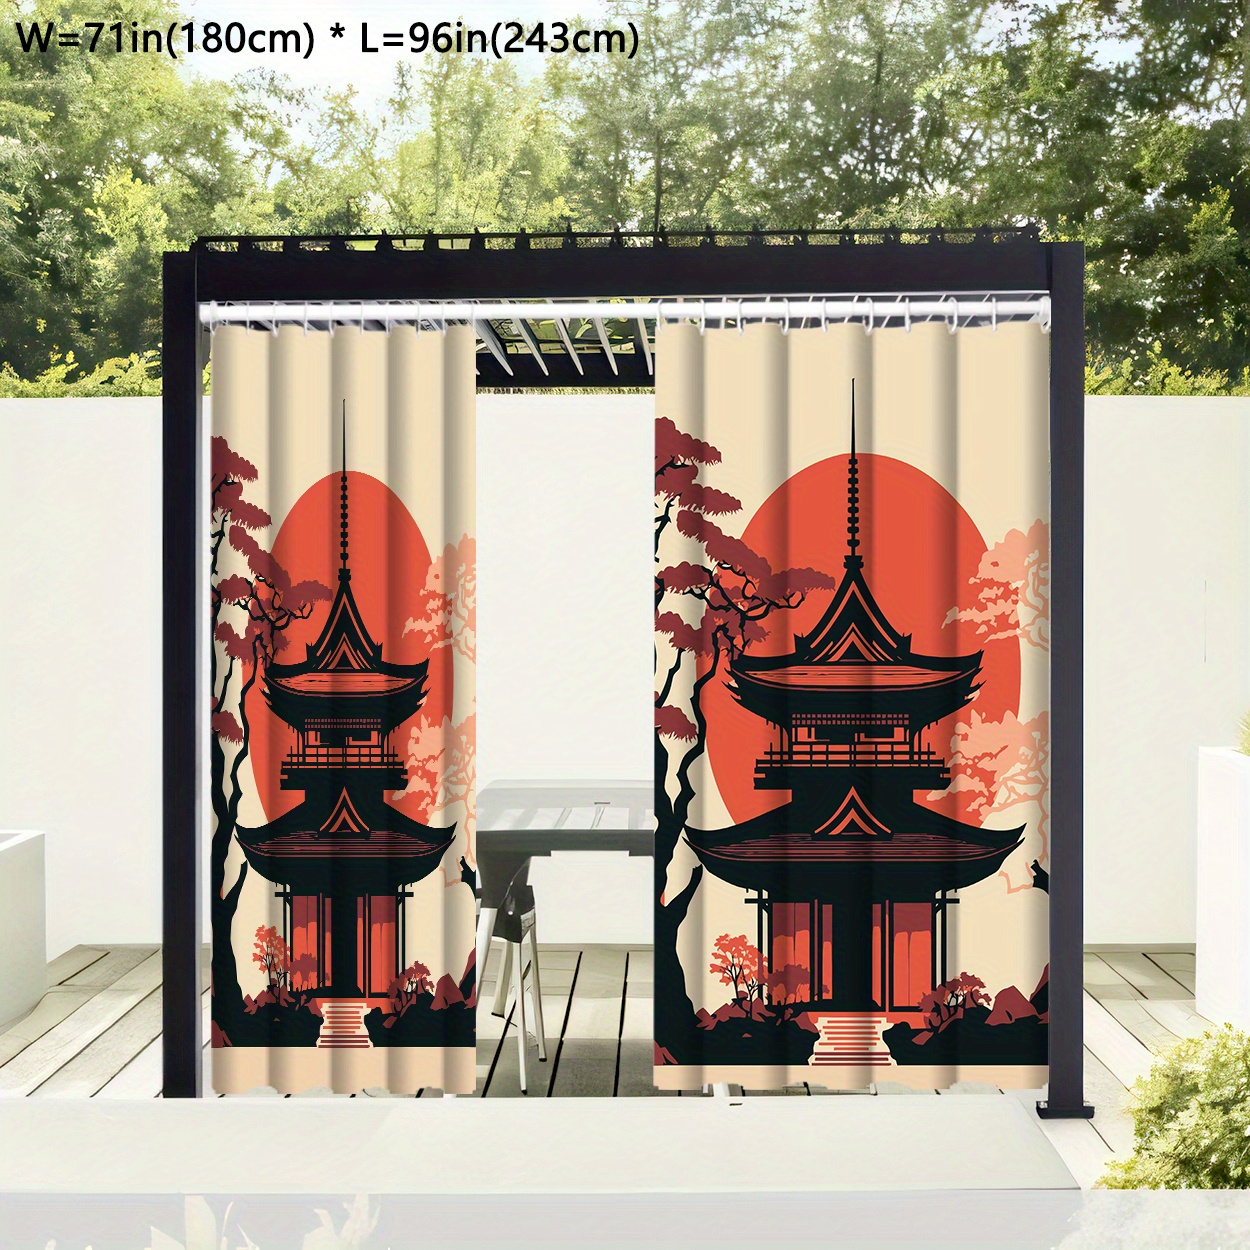 

1pc Japanese Pagoda Pattern Outdoor Curtain, Waterproof Garden Drapes For Gazebo, Porch, Patio, Asian Style Decor